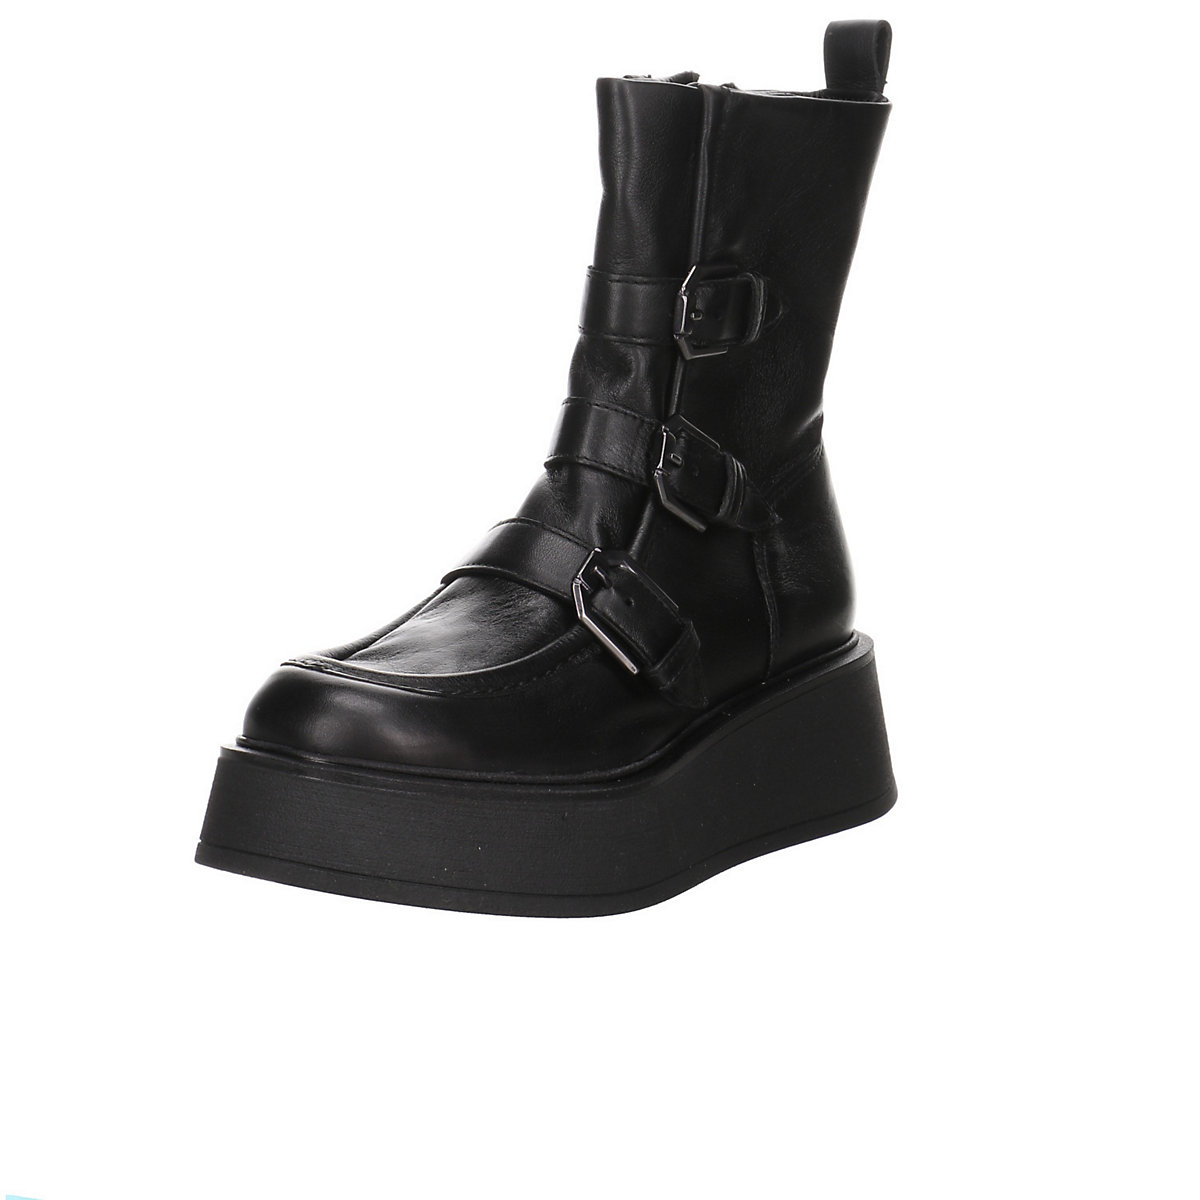 MJUS Damen Stiefeletten Schuhe Biker Boots Elegant Freizeit Glattleder uni Plateau-Stiefeletten schwarz